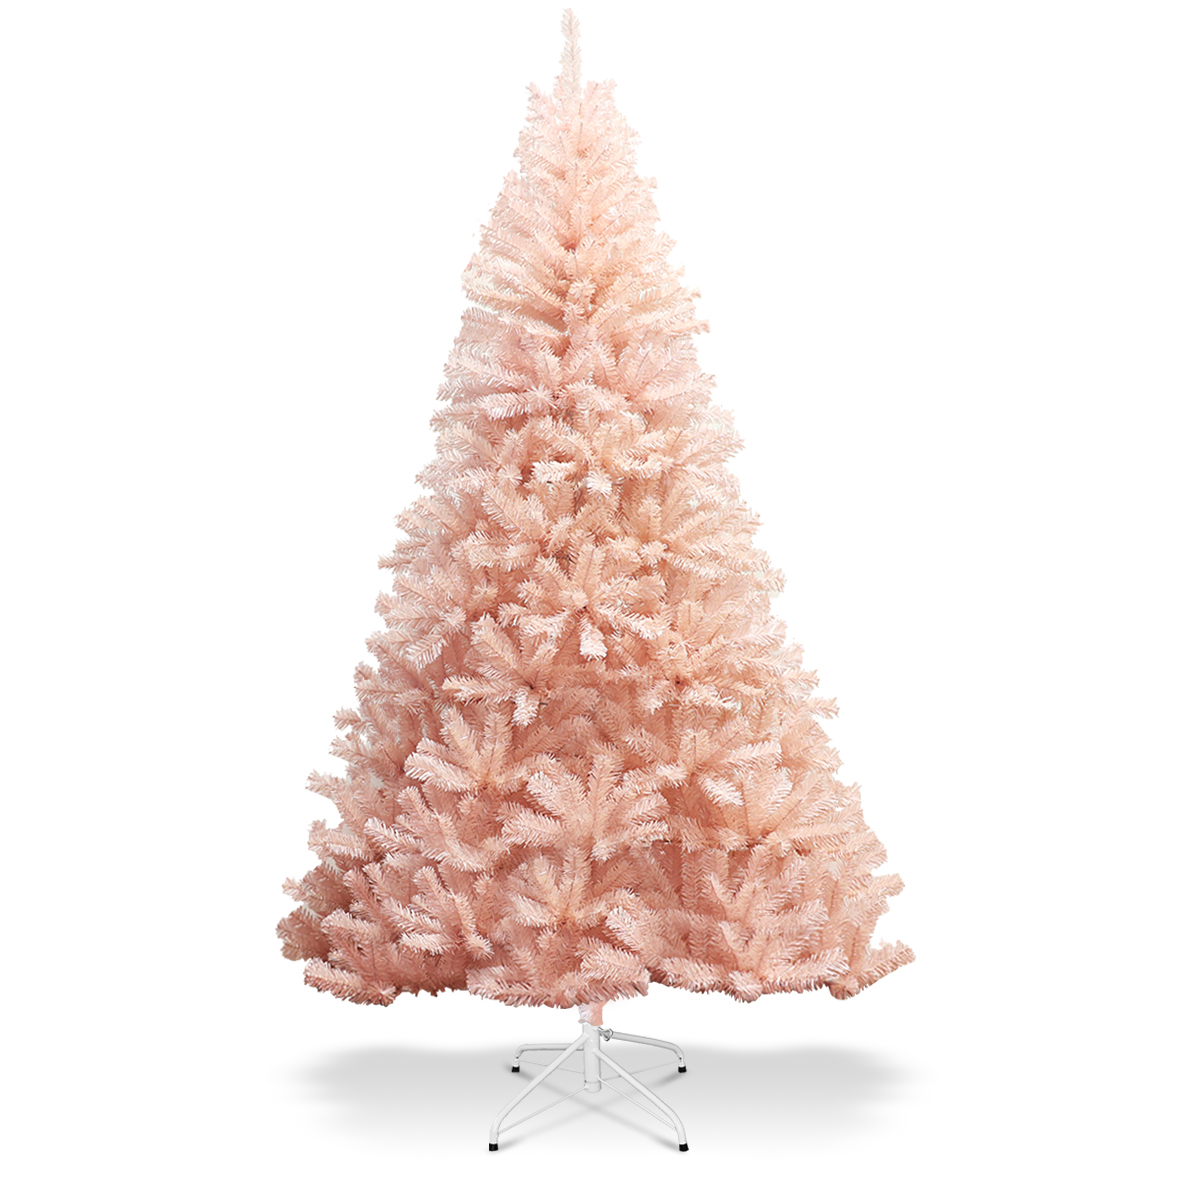 6' Costway Pink Unlit Fir Hinged Full Metal Christmas Tree $70 + Free Shipping